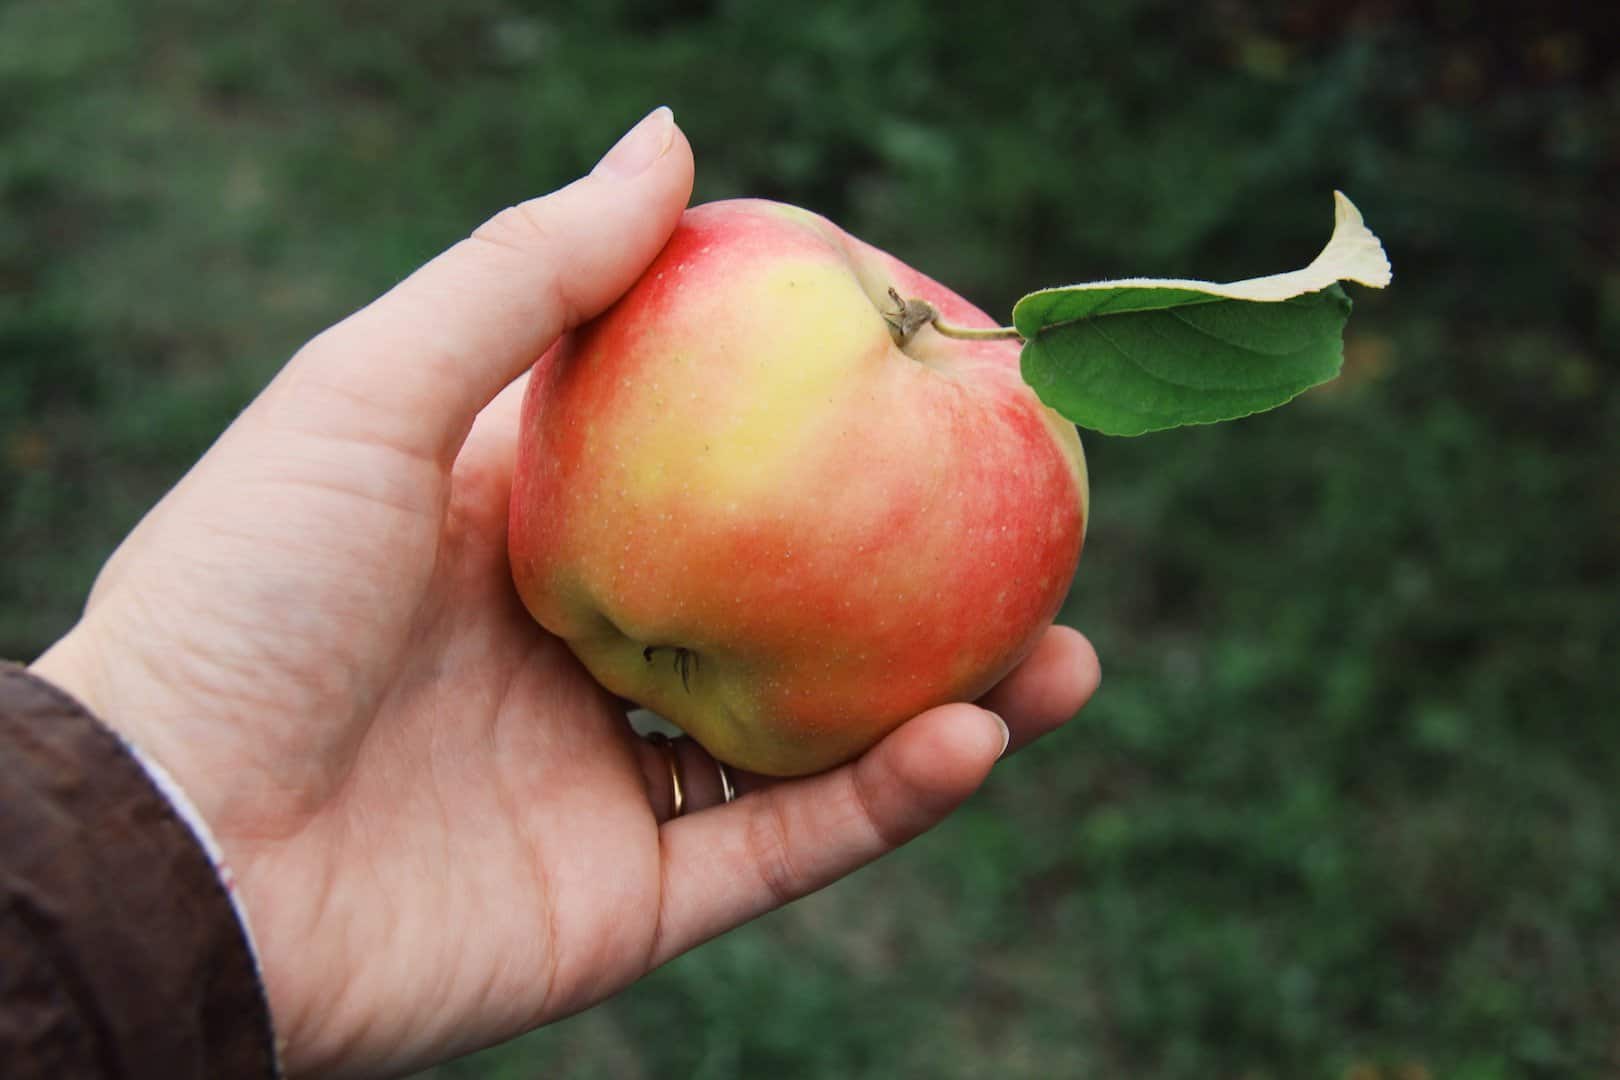 Apple picking during autumn harvest season